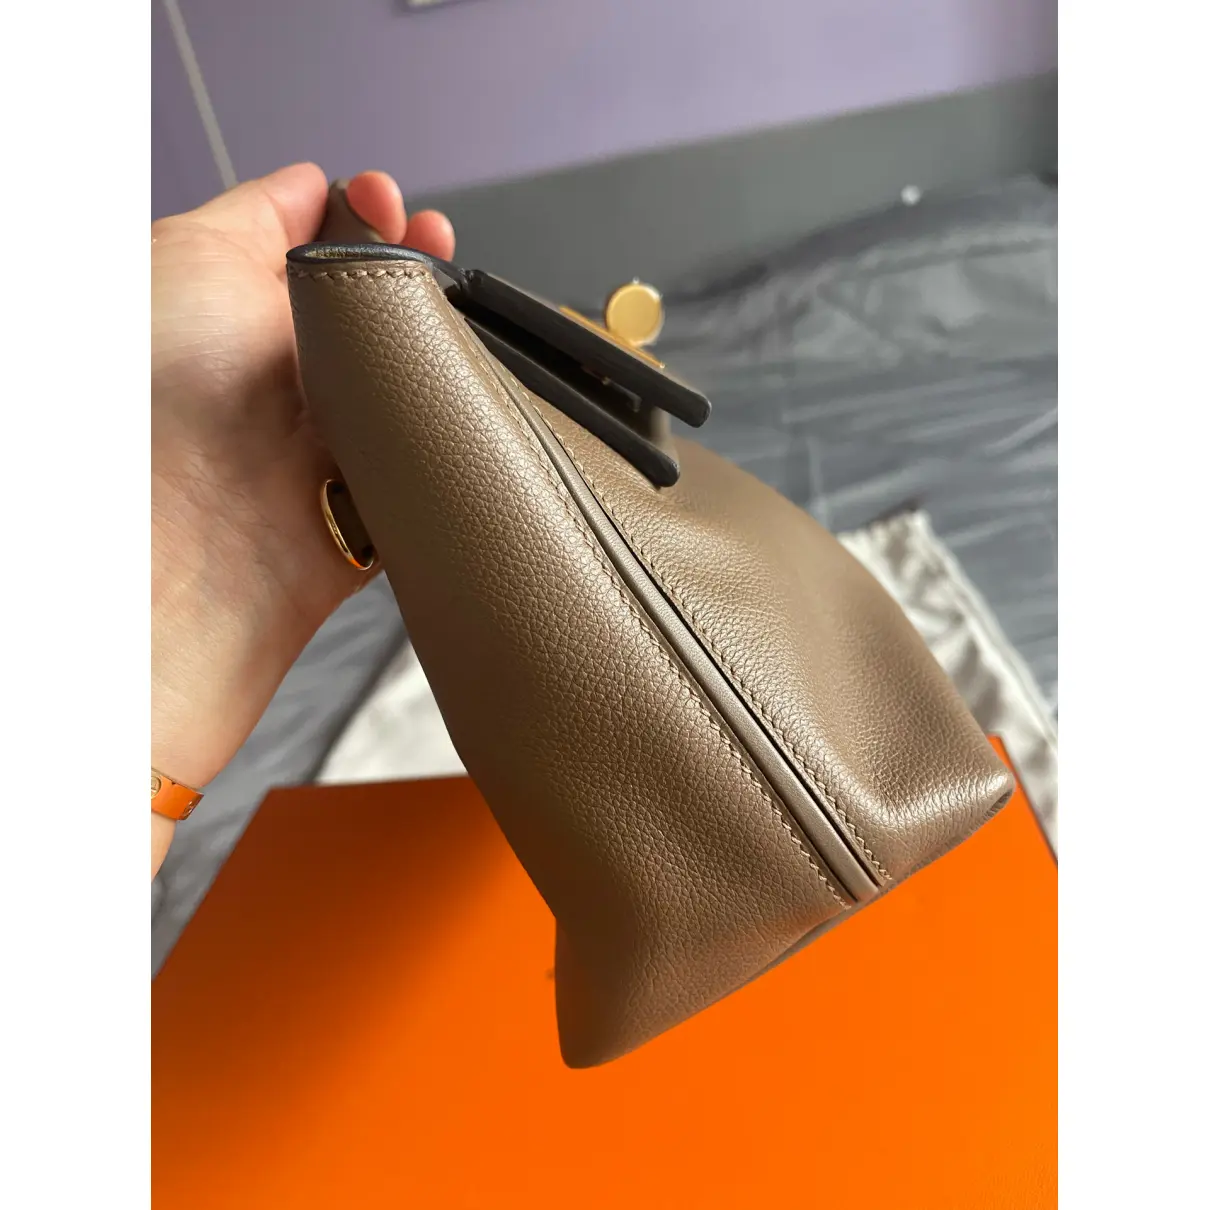 Buy Hermès 24/24 leather handbag online